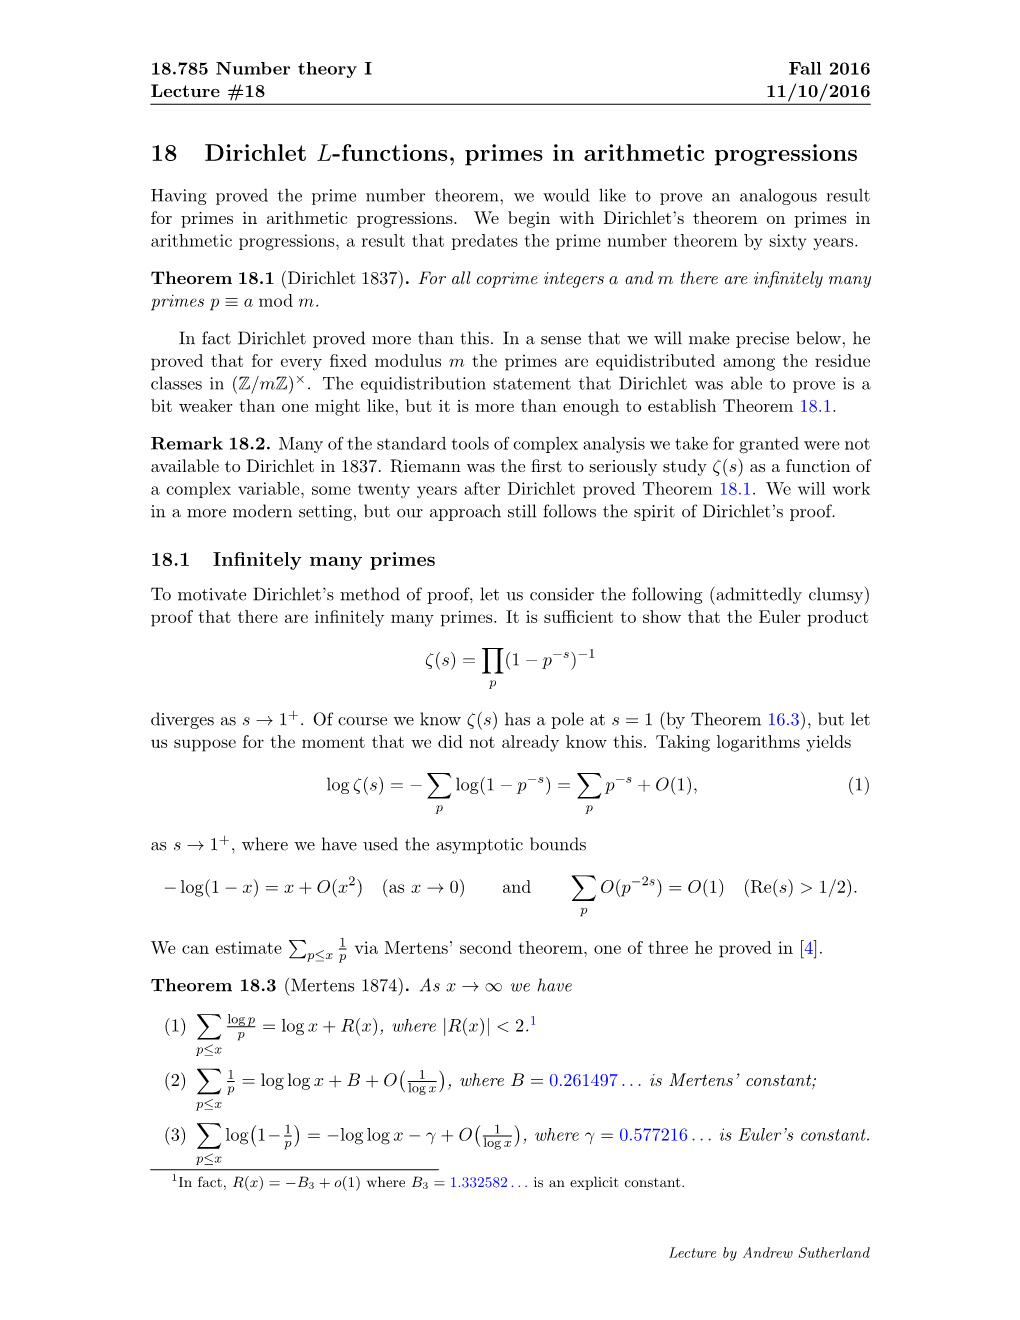 18 Dirichlet L-Functions, Primes in Arithmetic Progressions